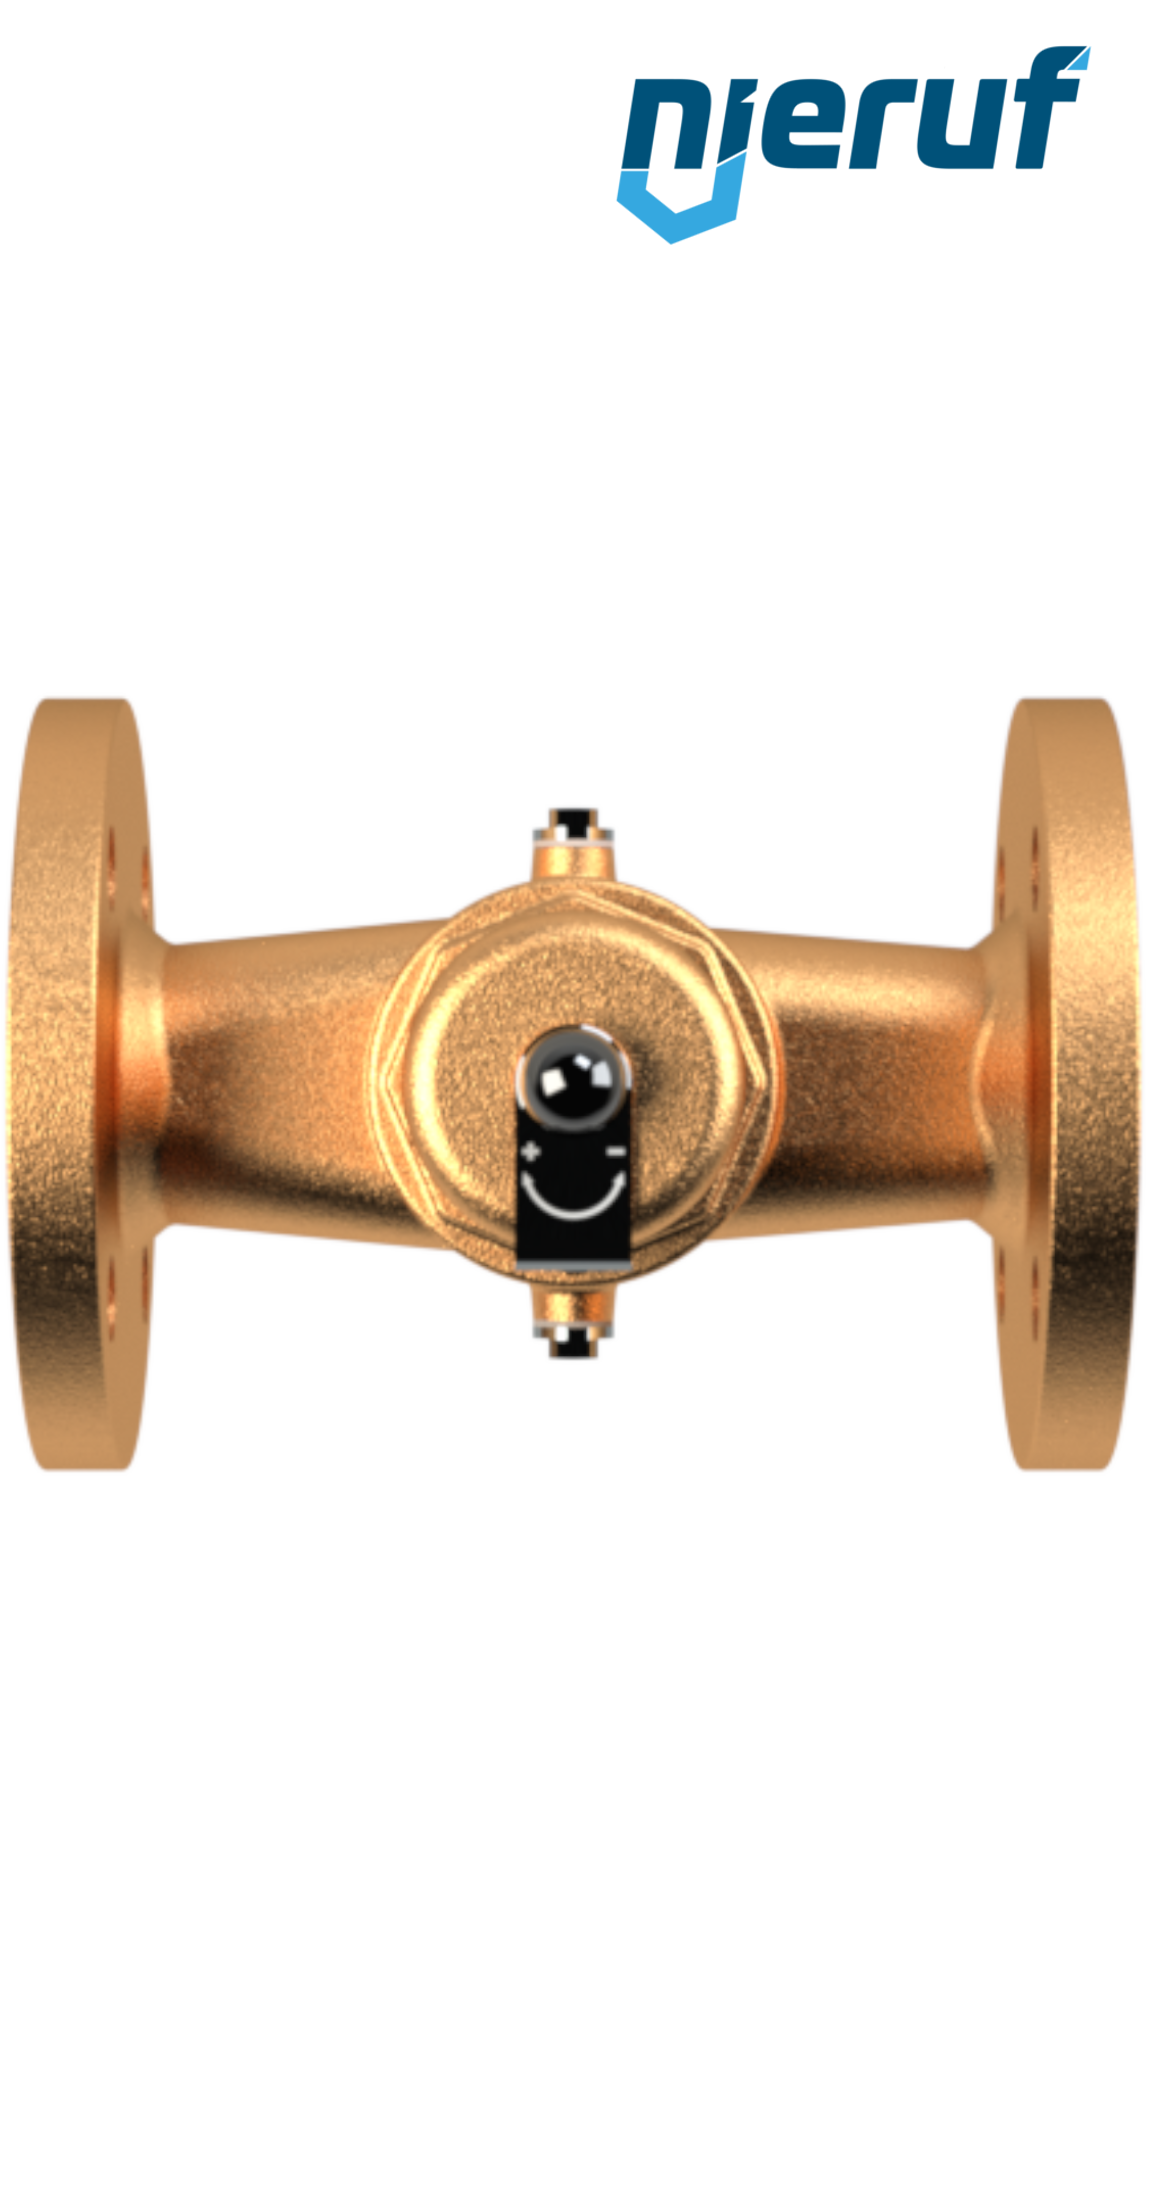 pressure reducing valve DN 50 PN16 DM06 gunmetal/brass FKM 1.0 - 8.0 bar